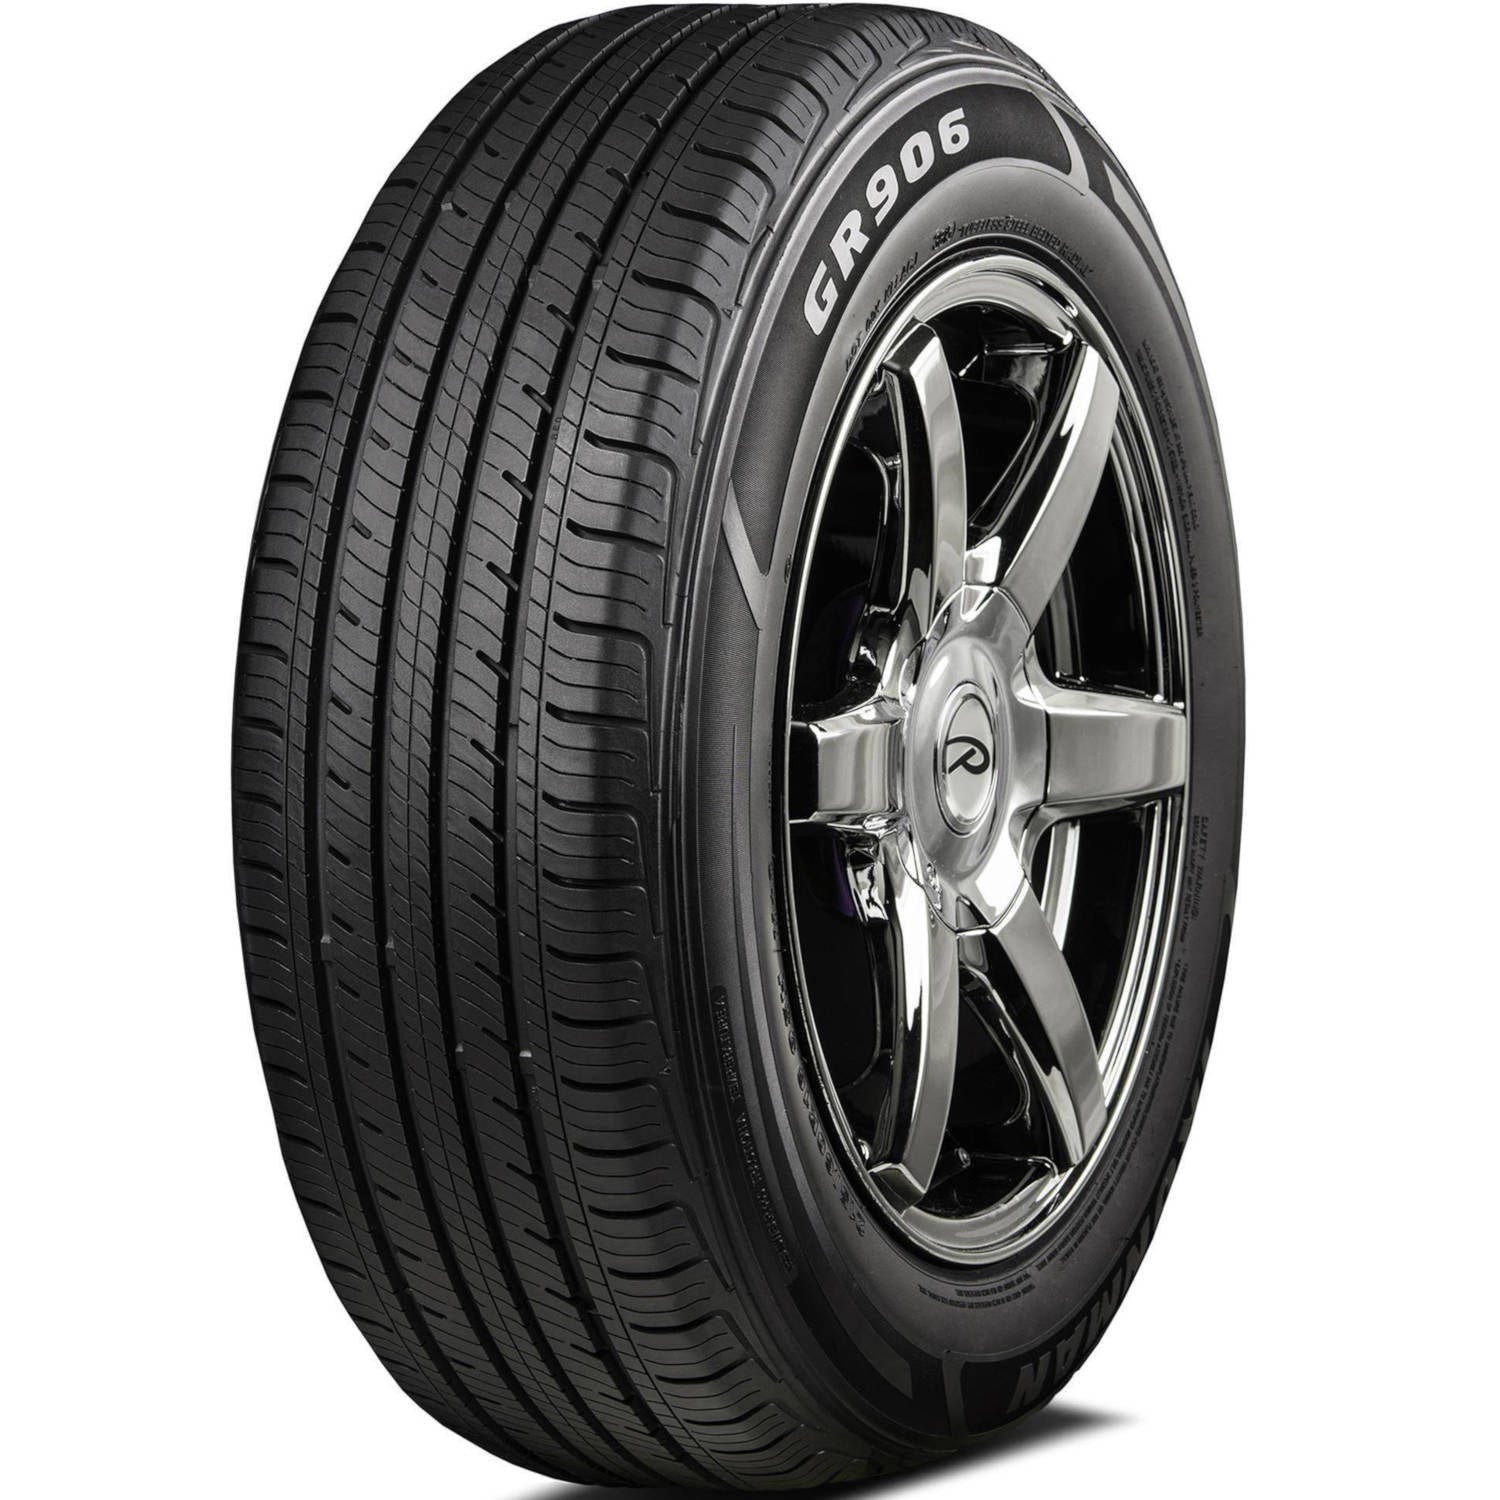 IRONMAN GR906 215/60R17 (27.2X8.5R 17) Tires